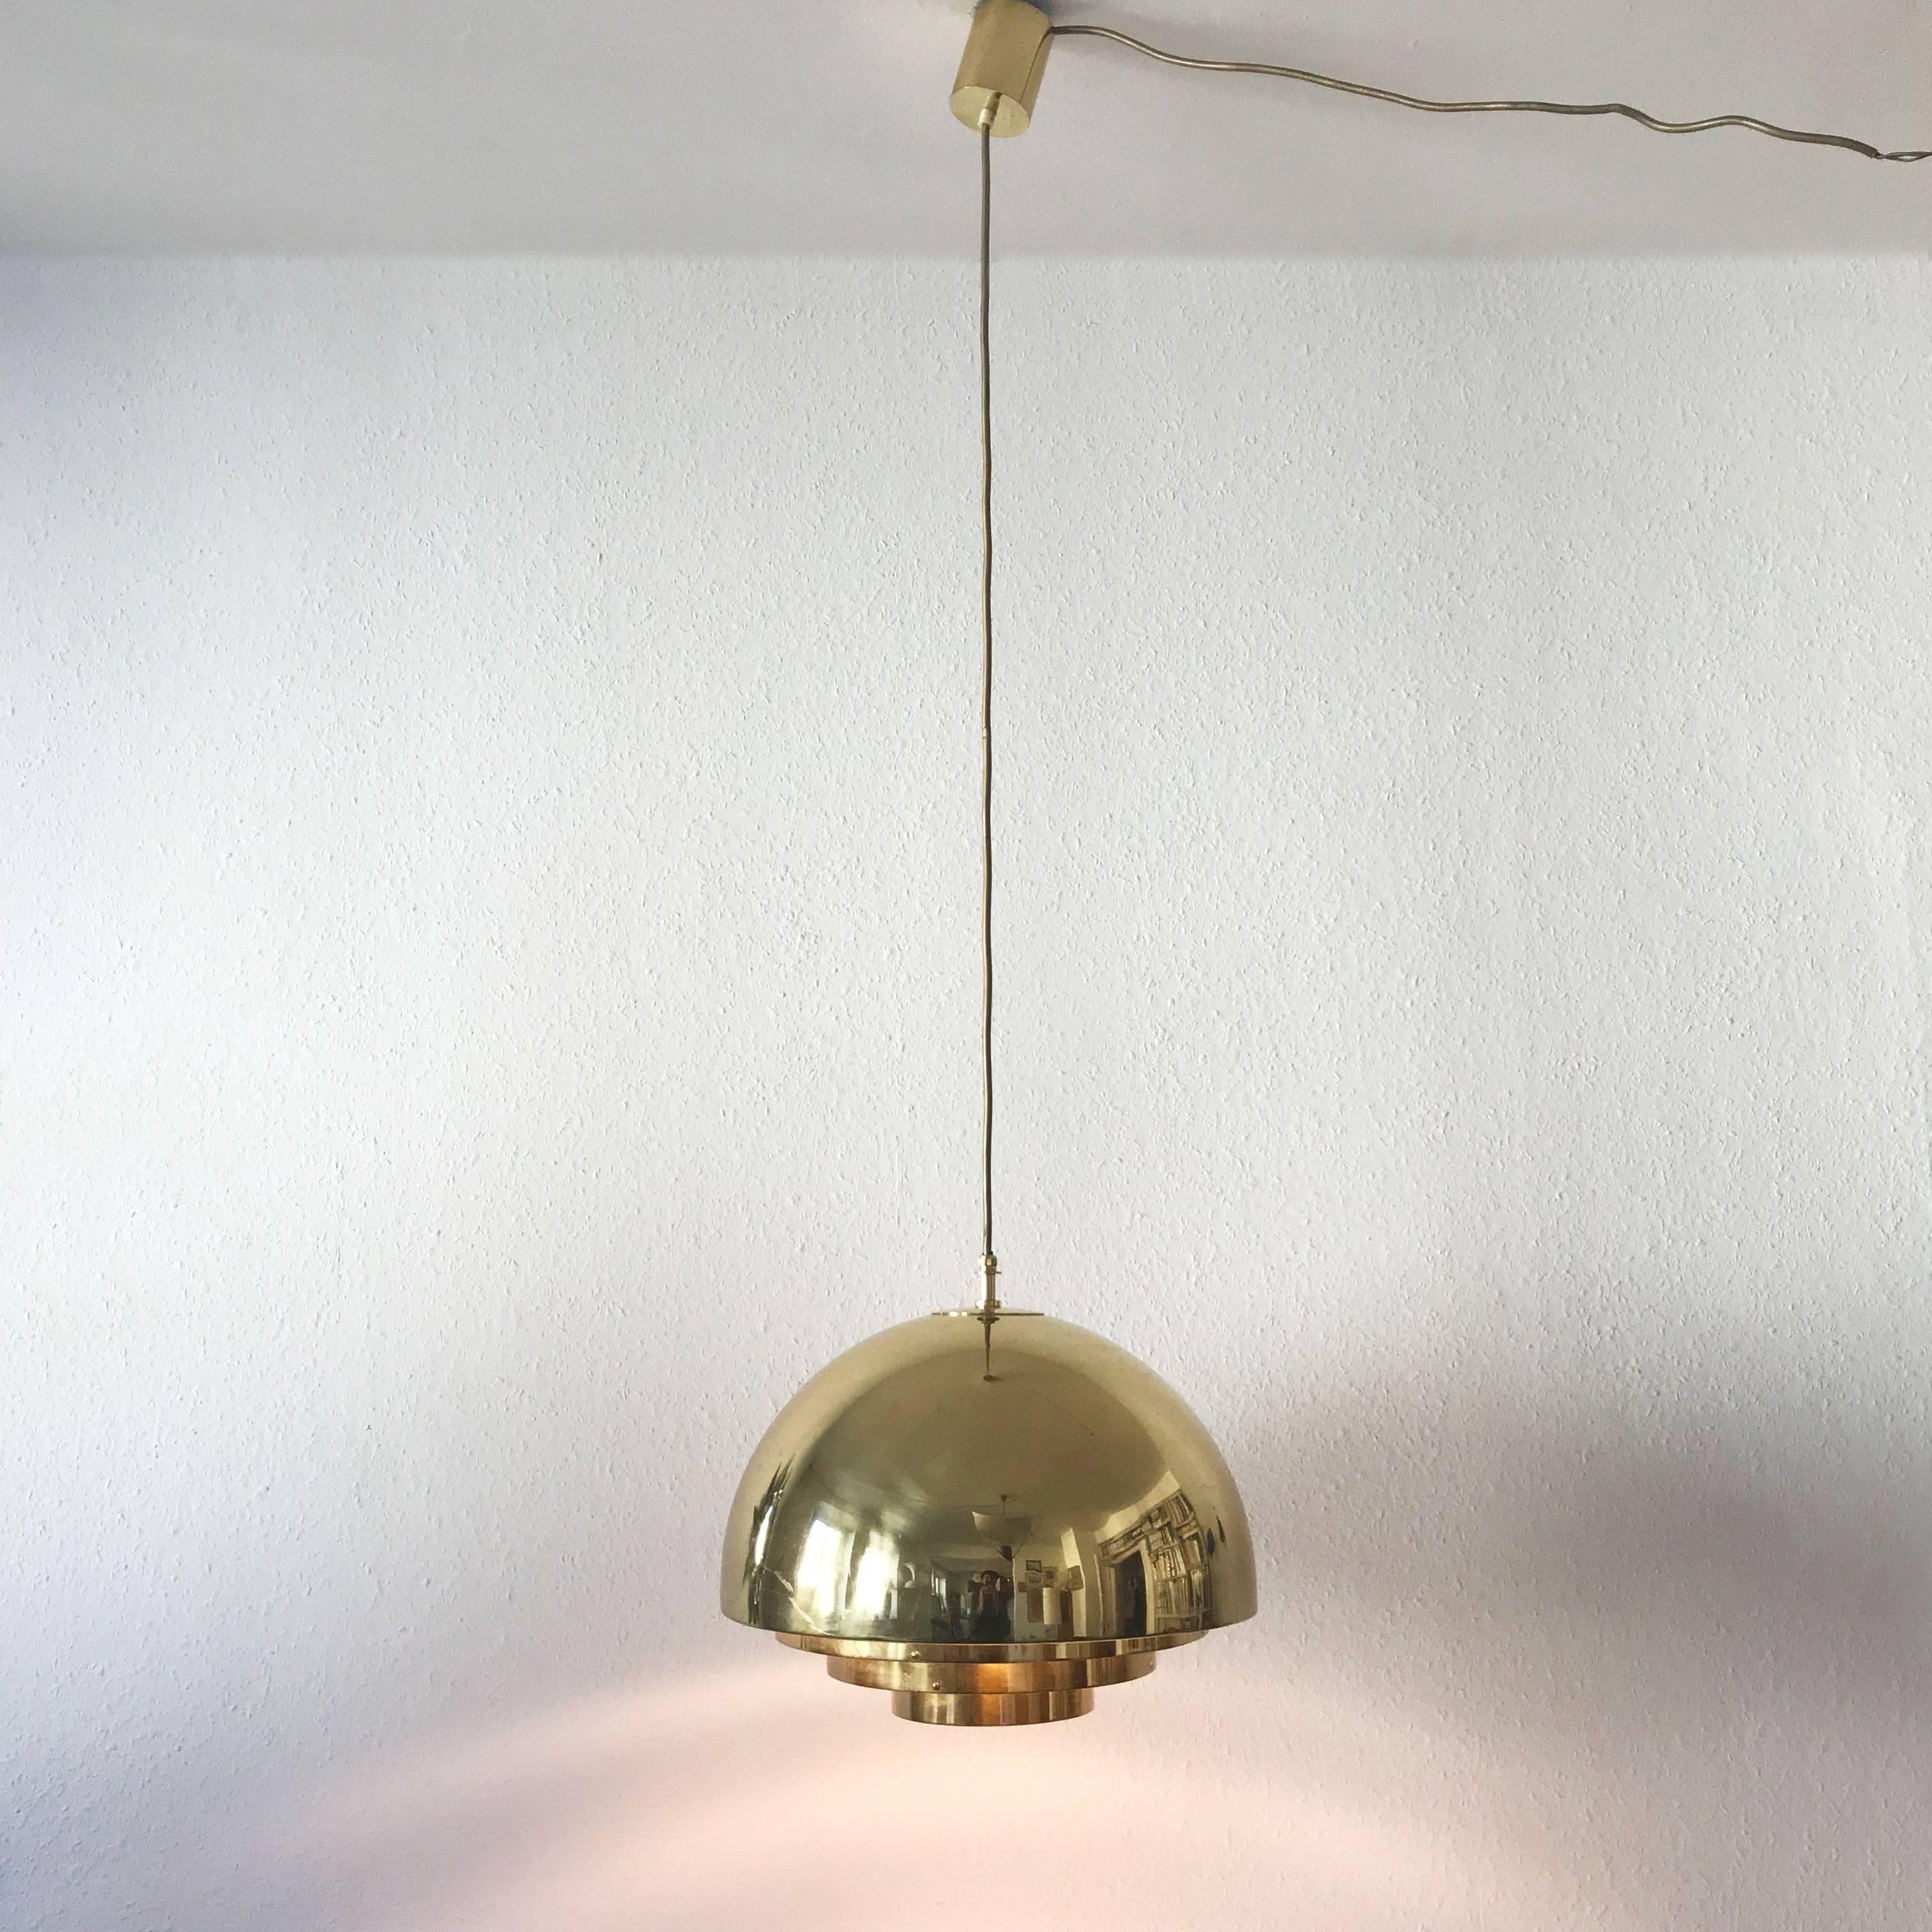 Polished Brass Pendant Lamp Dome by Vereinigte Werkstätten München in 1960s For Sale